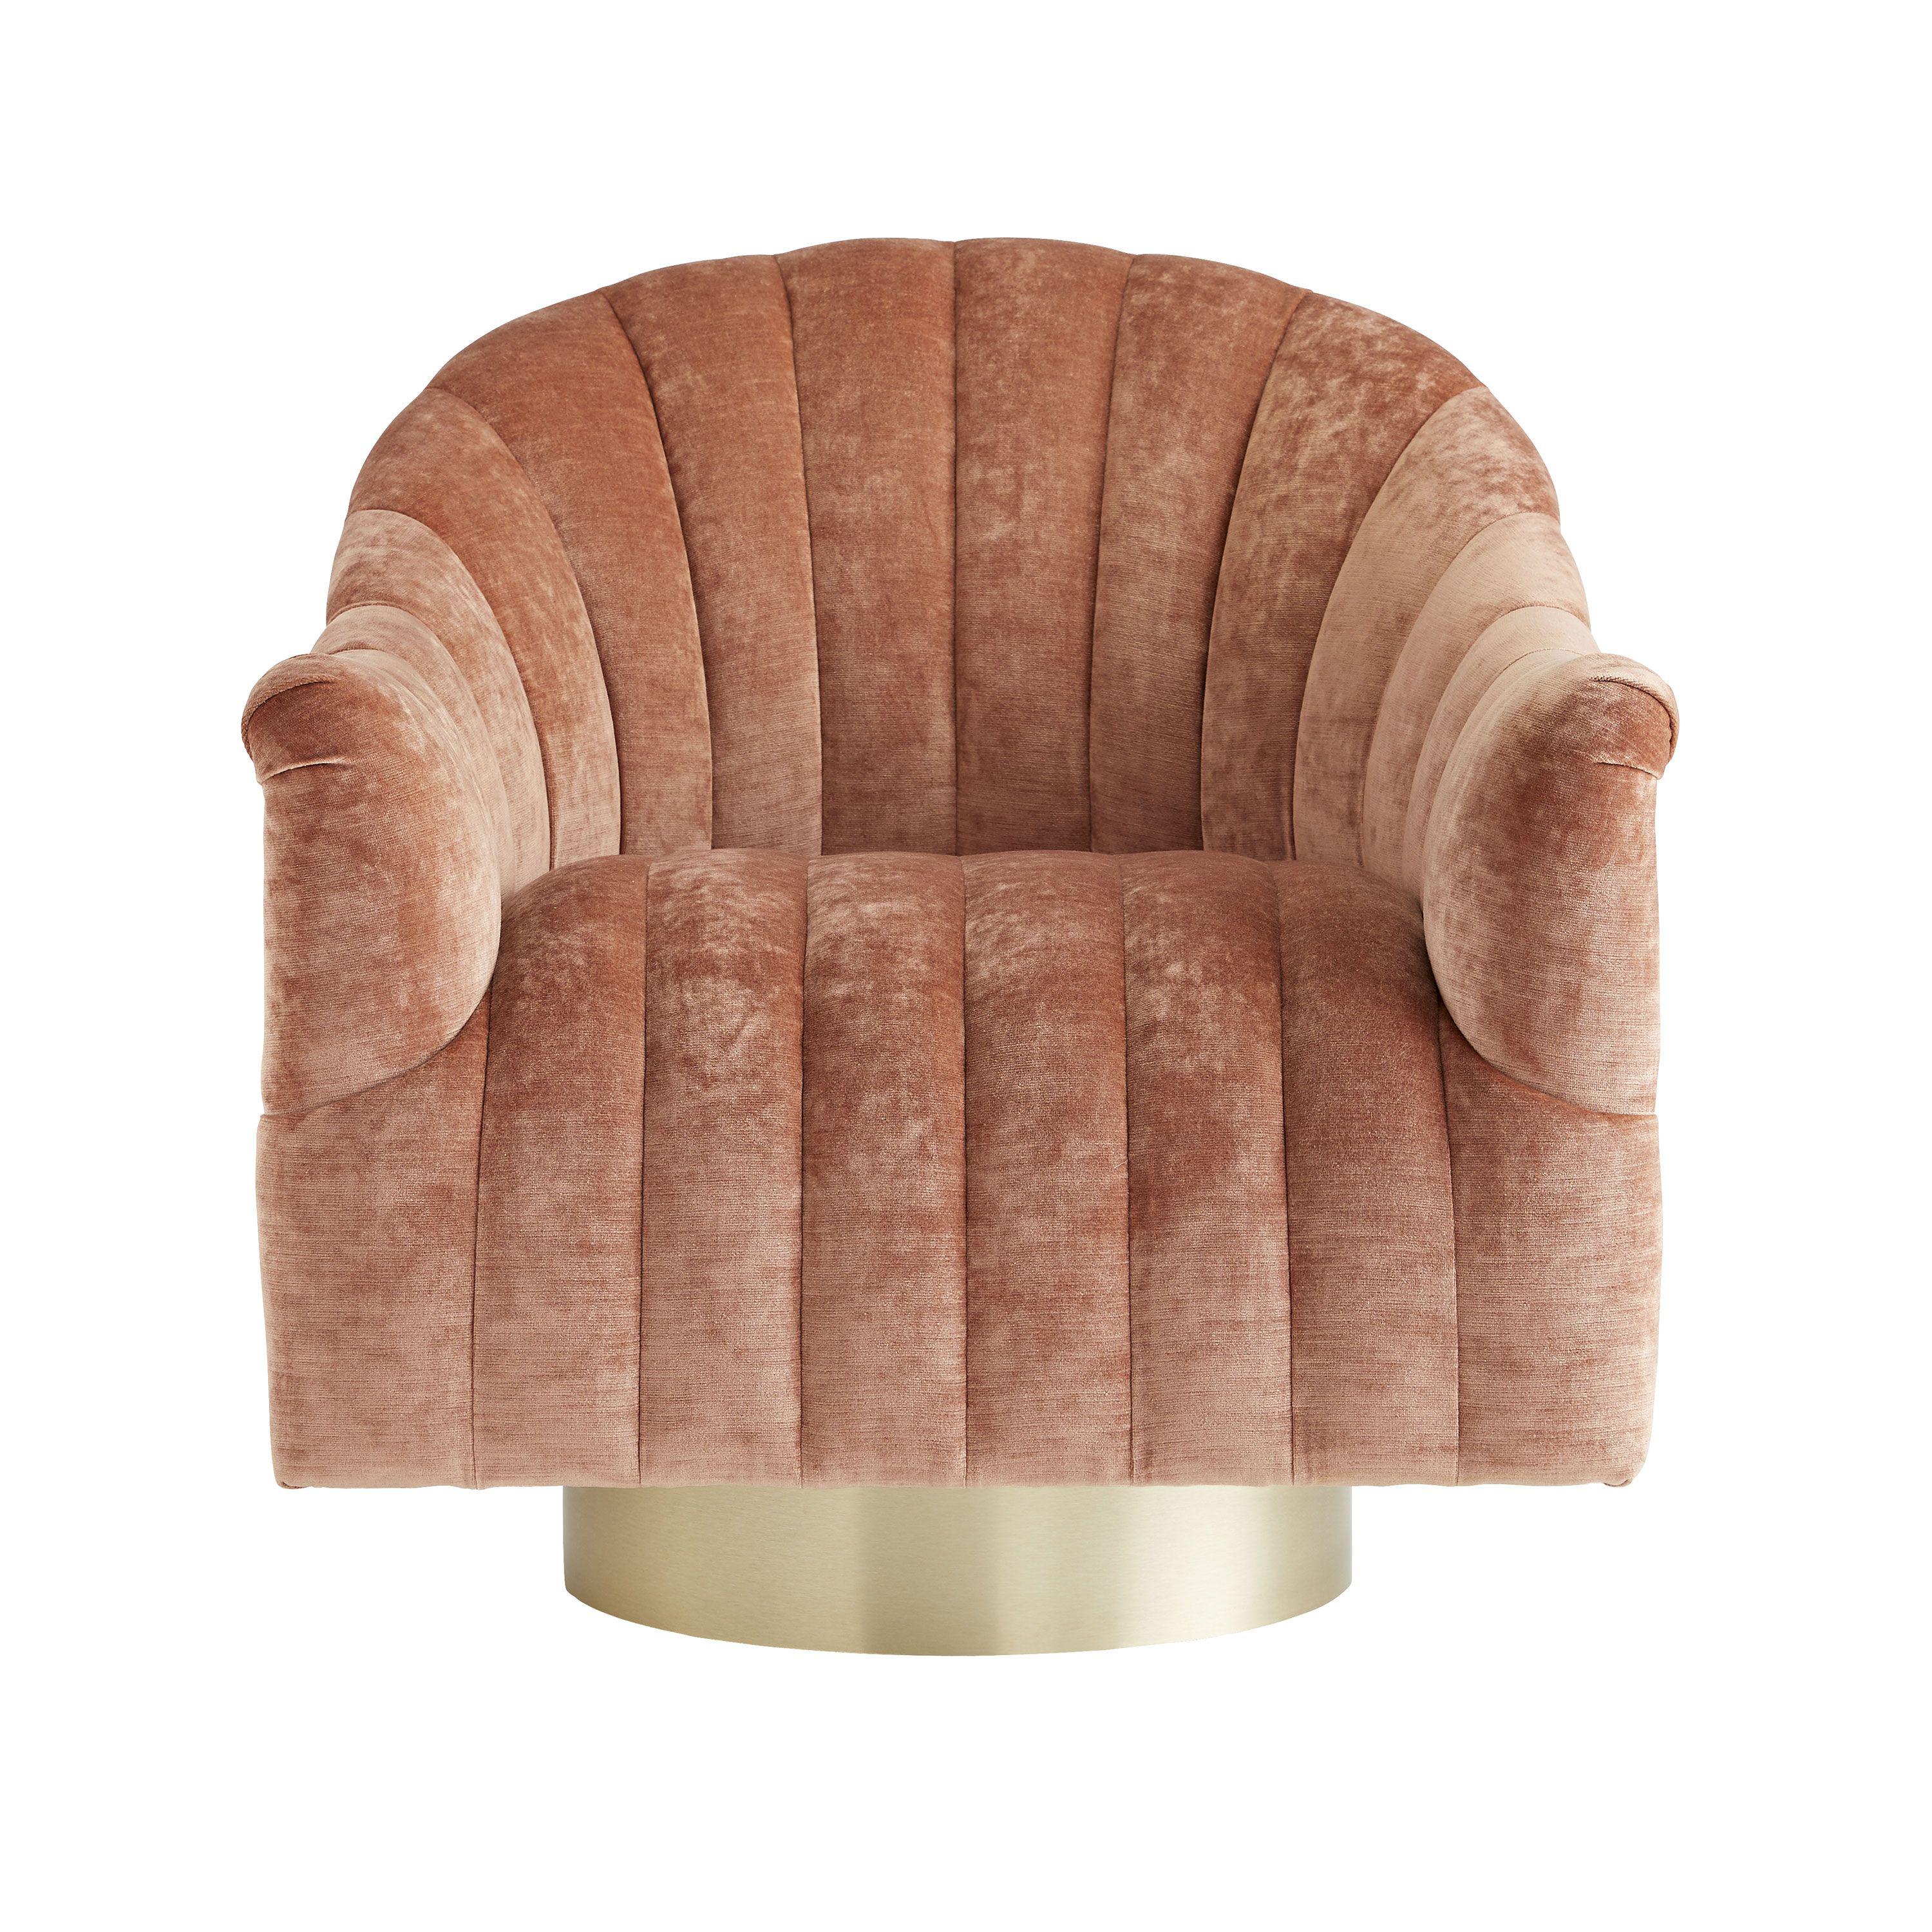 Купить Кресло Springsteen Chair Dusty Rose Velvet Swivel в интернет-магазине roooms.ru